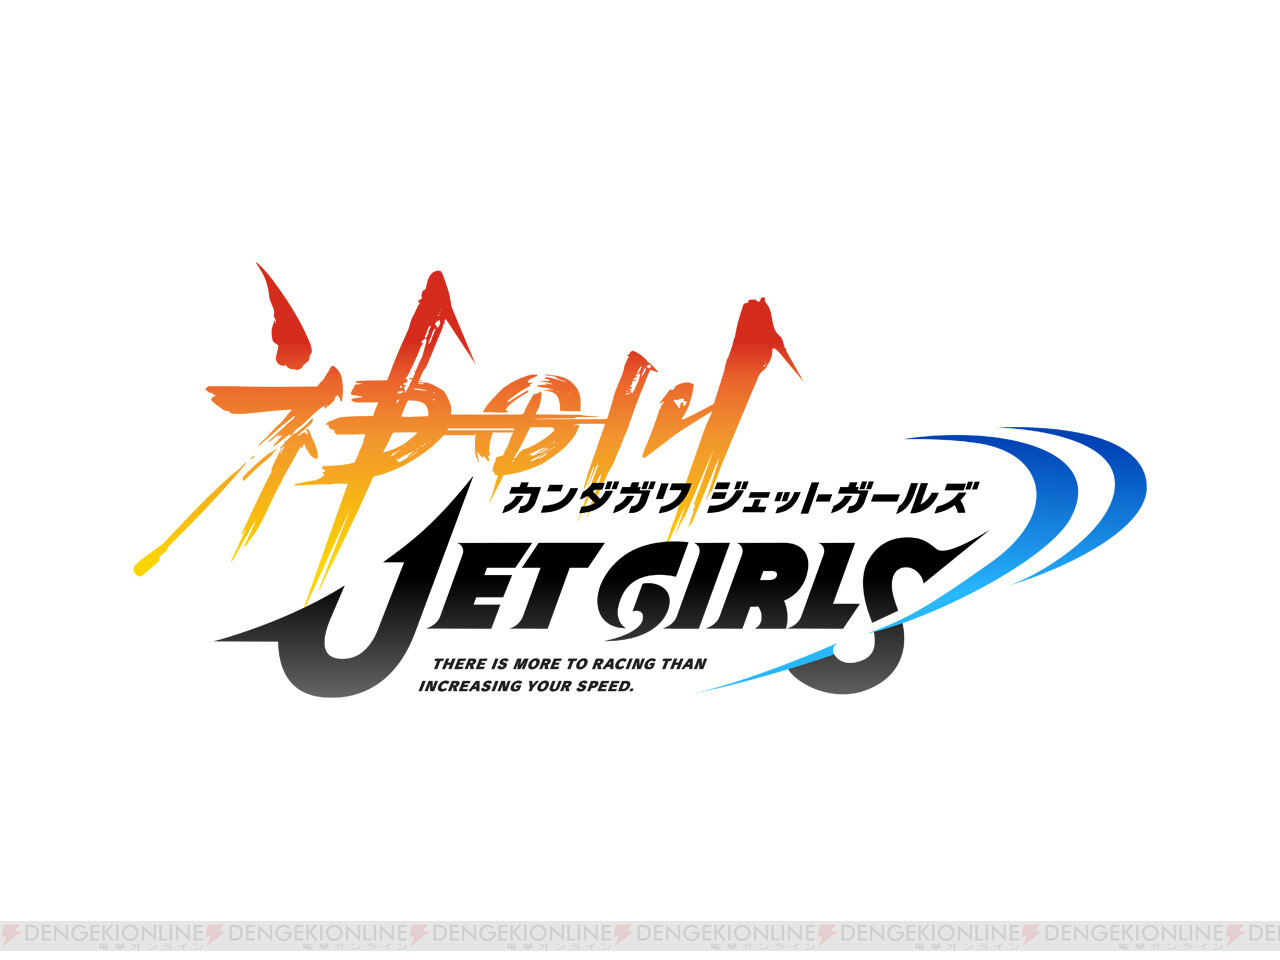 Ps4 神田川jet Girls ダウンロード版がプレオーダー開始 電撃オンライン